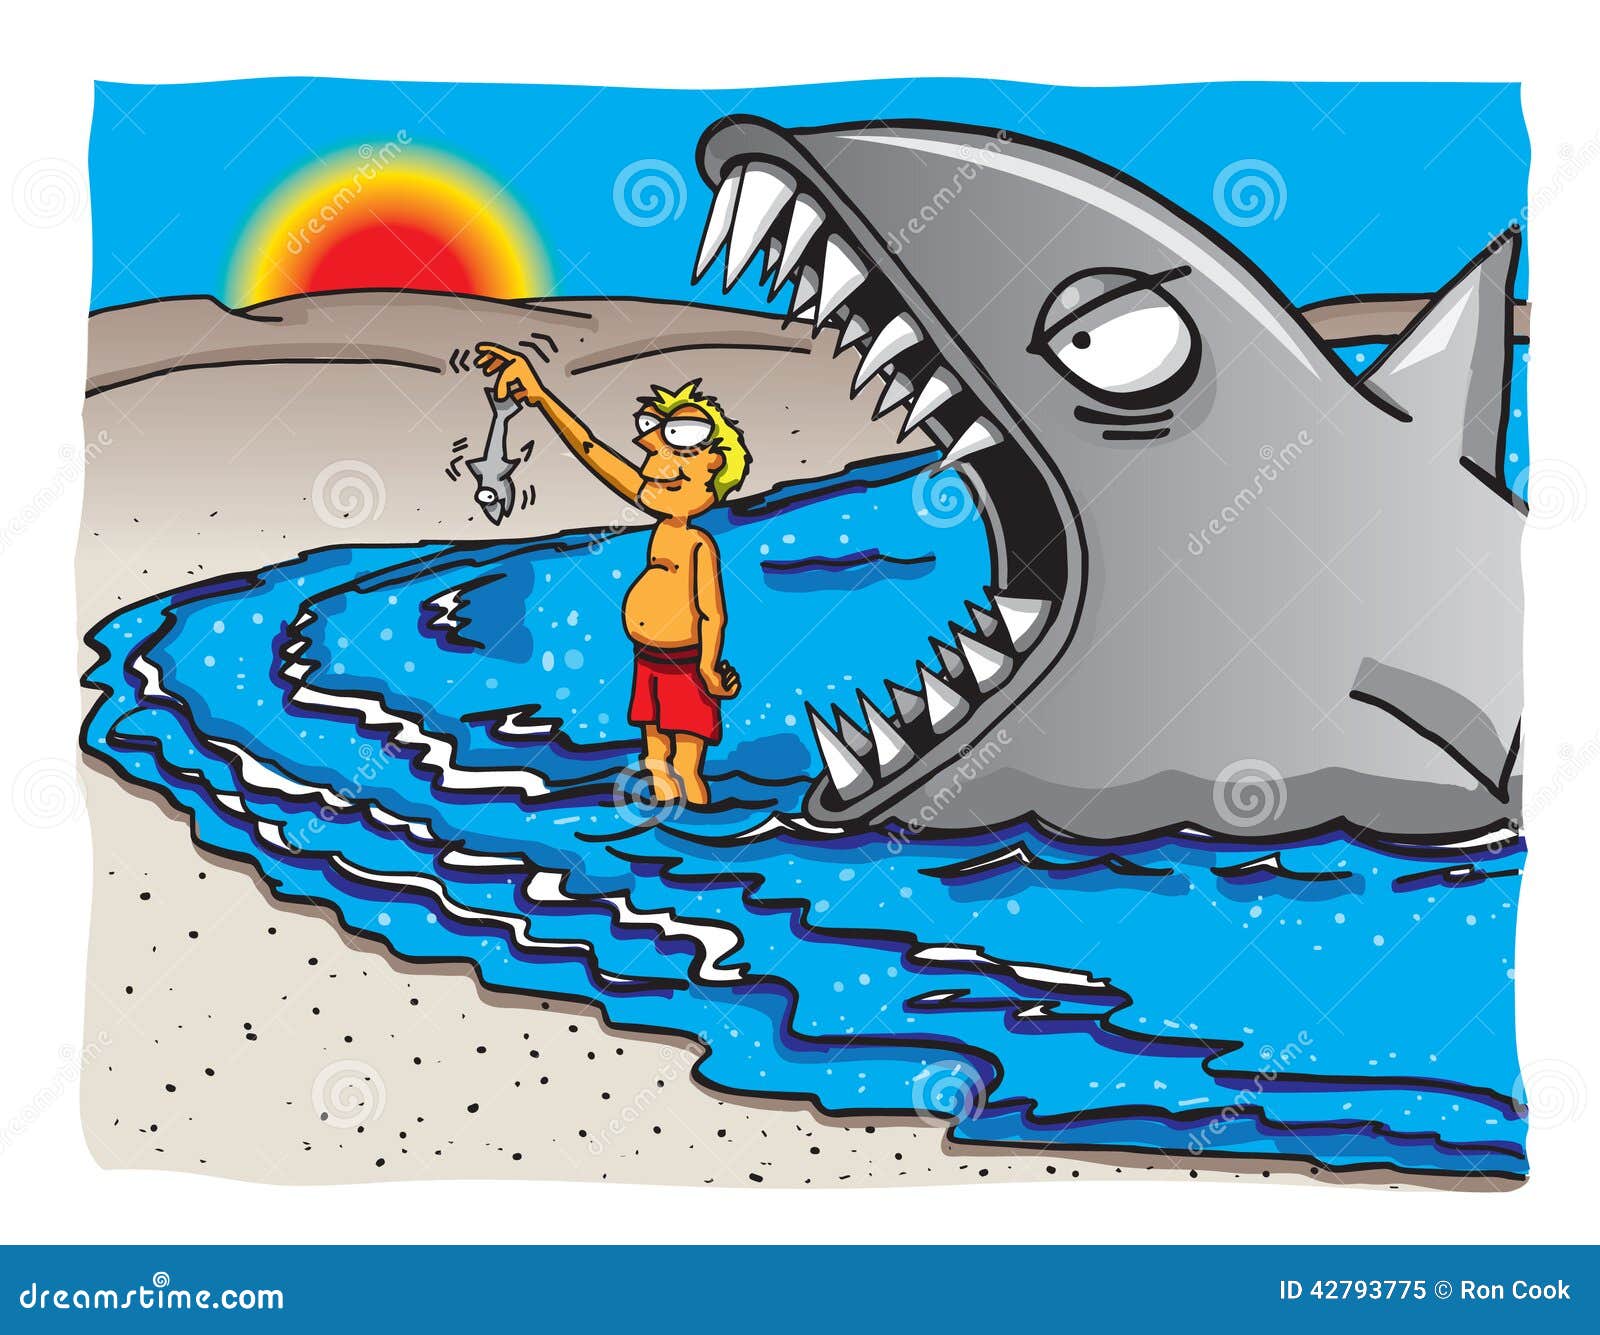 big-fish-little-fish-vector-cartoon-man-holding-small-to-be-eaten-shark-42793775.jpg